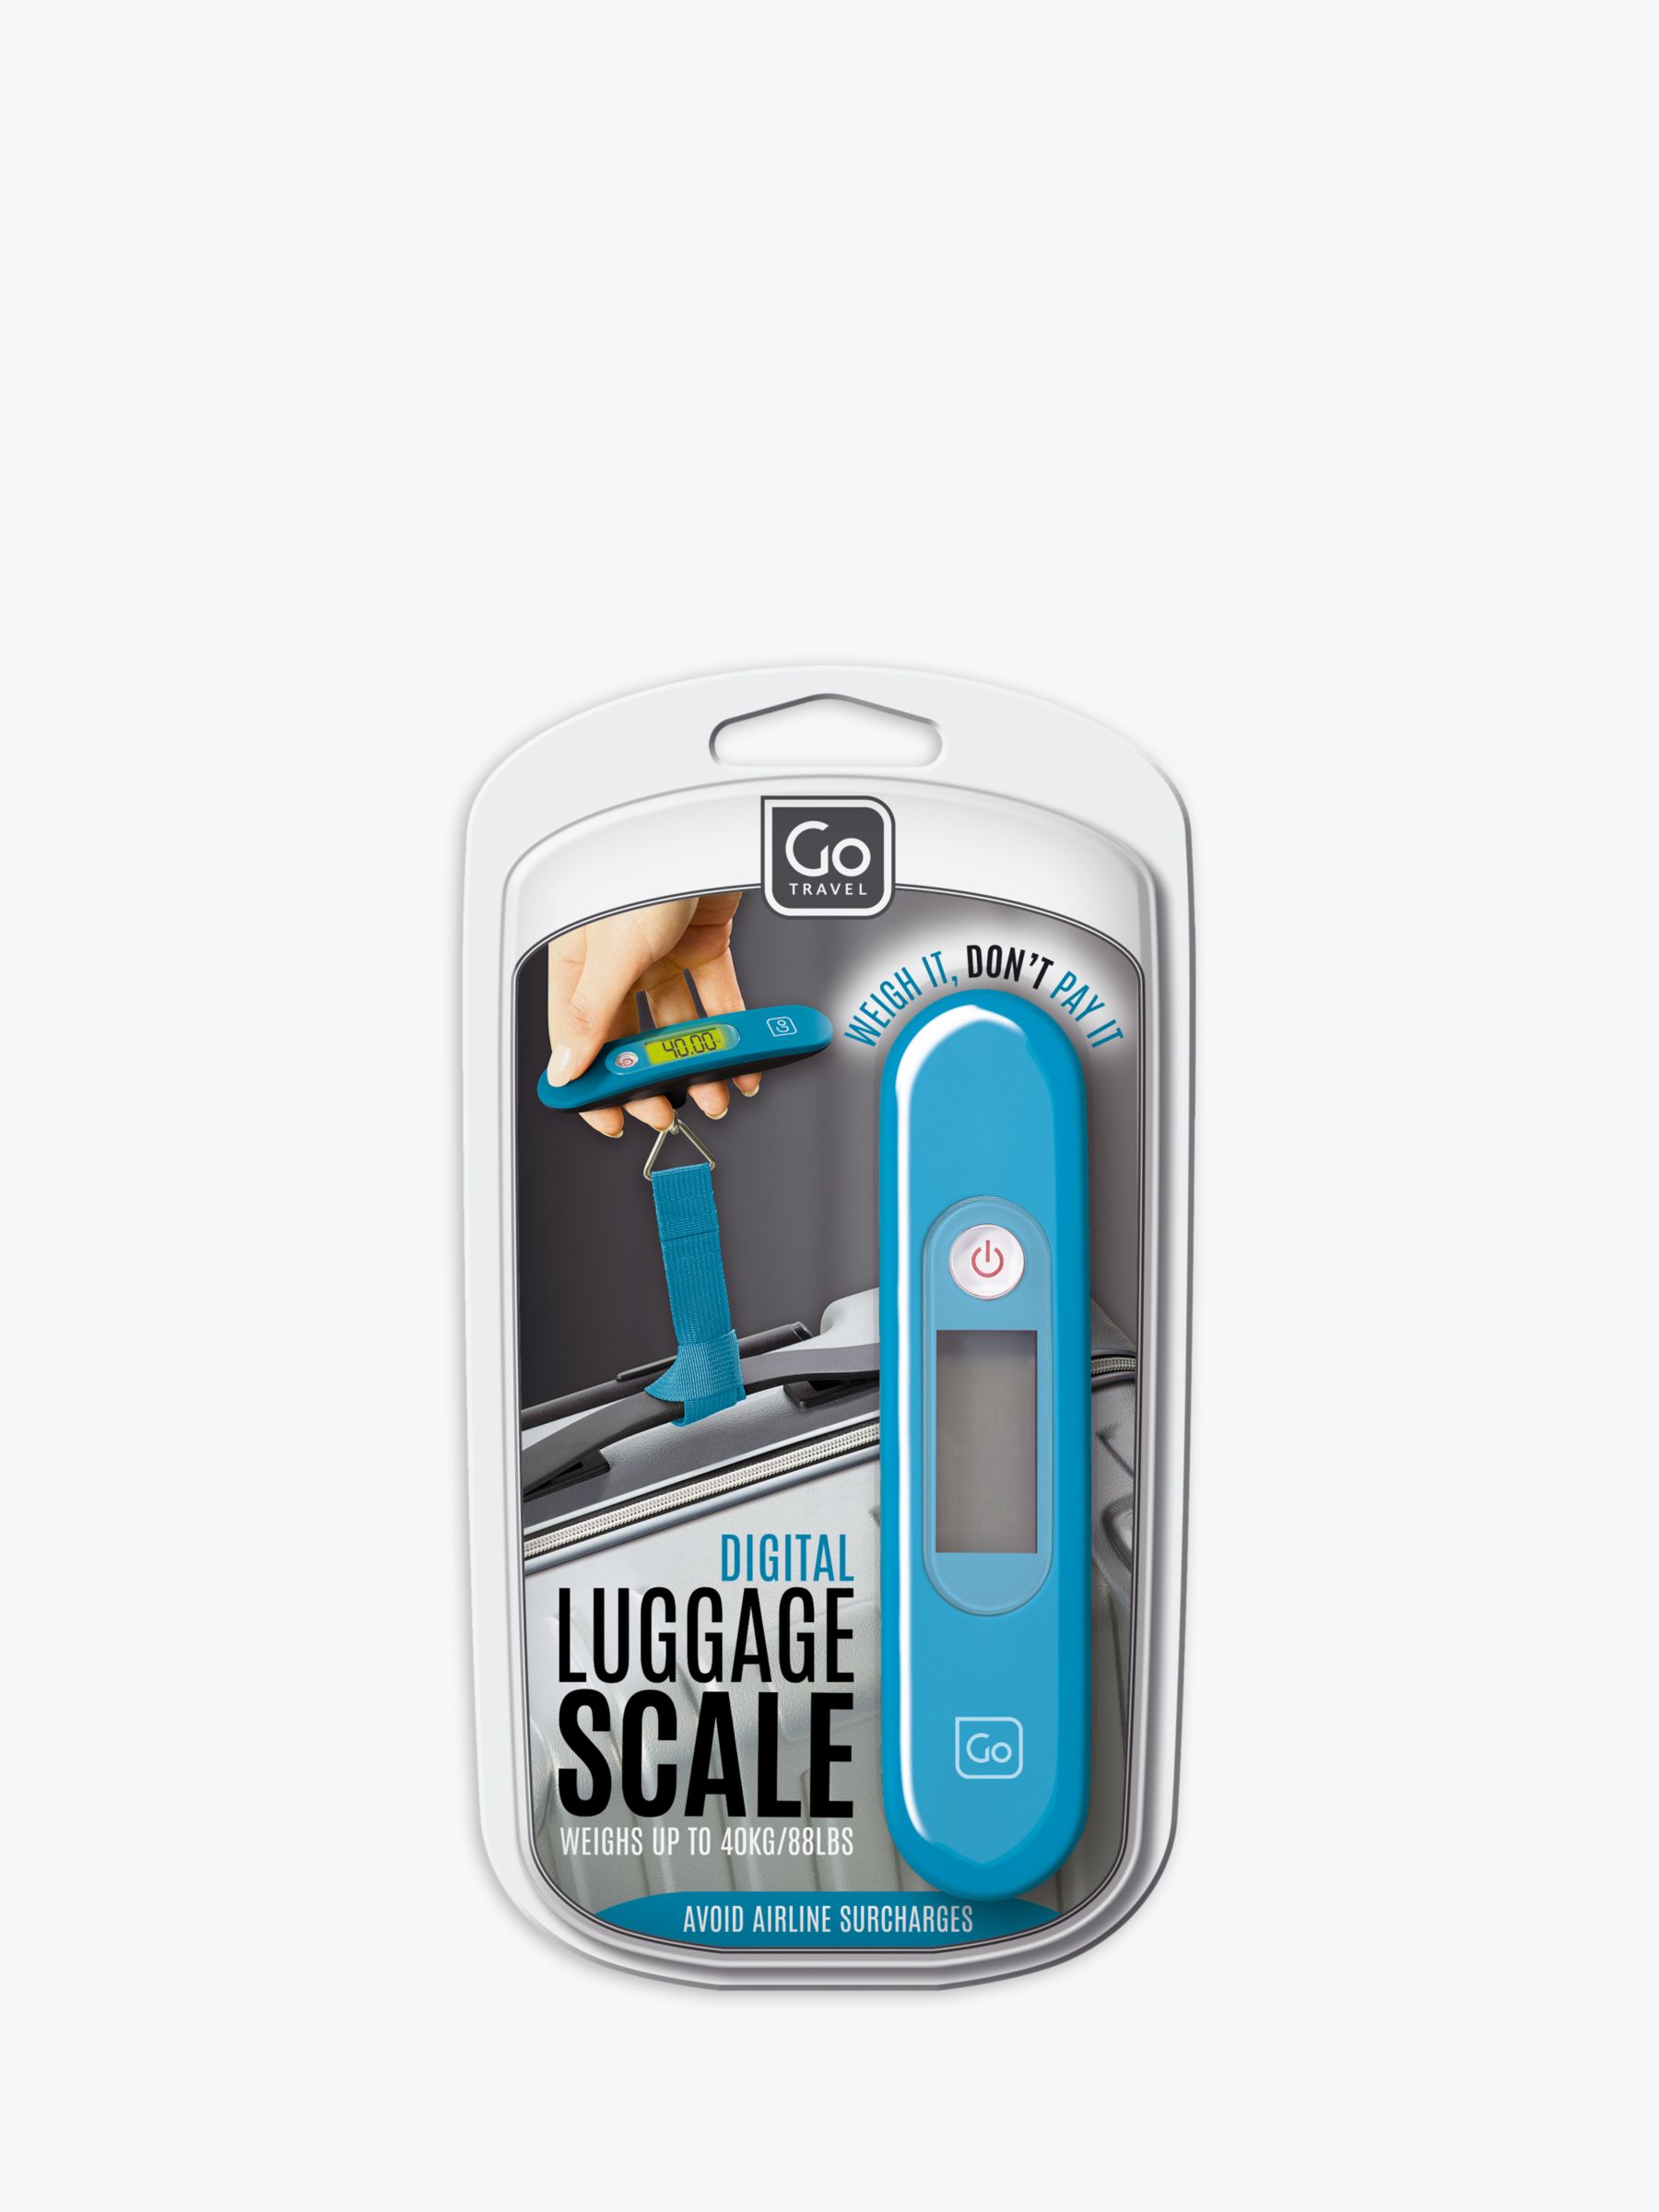 go luggage scale